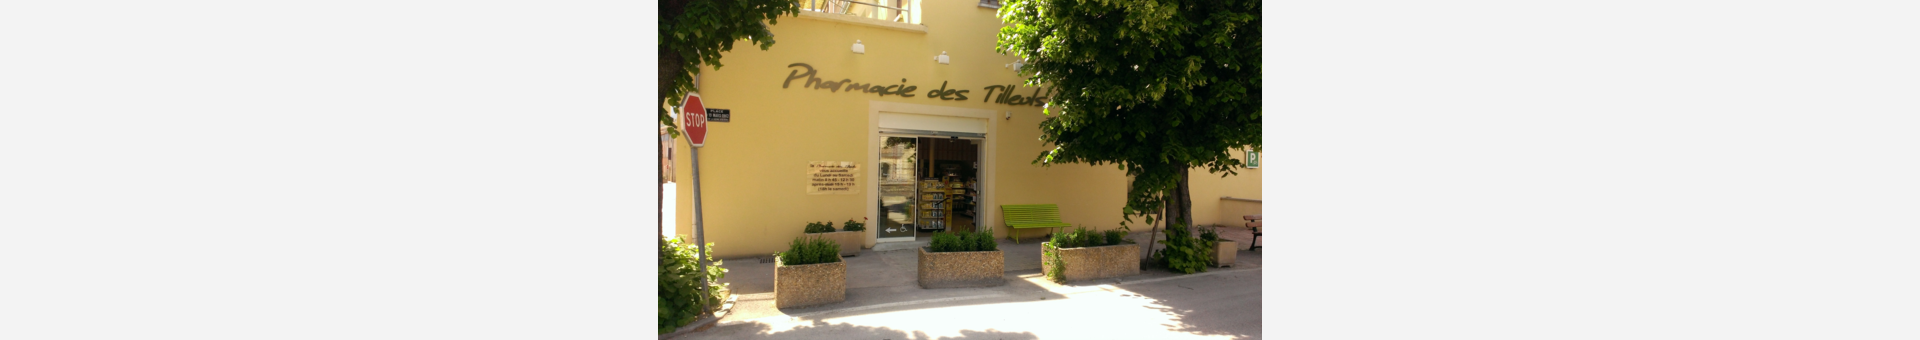 Pharmacie Des Tilleuls,Buis-les-Baronnies